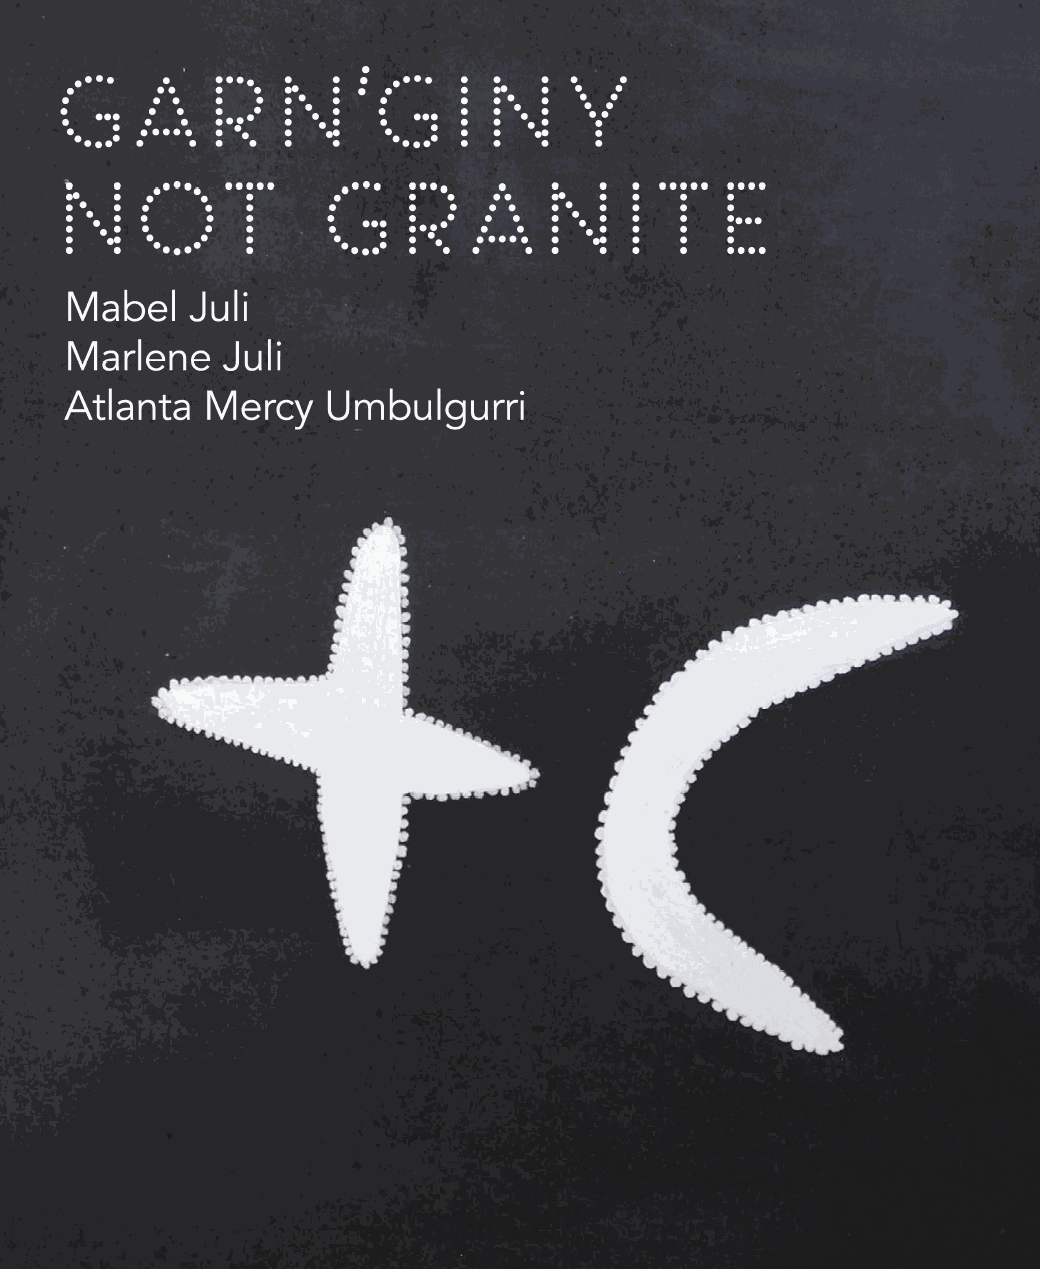 Garn'Giny not Granite - Mabel Marlene Juli, Atlanta Mercy Umbulgurri Everywhen Art